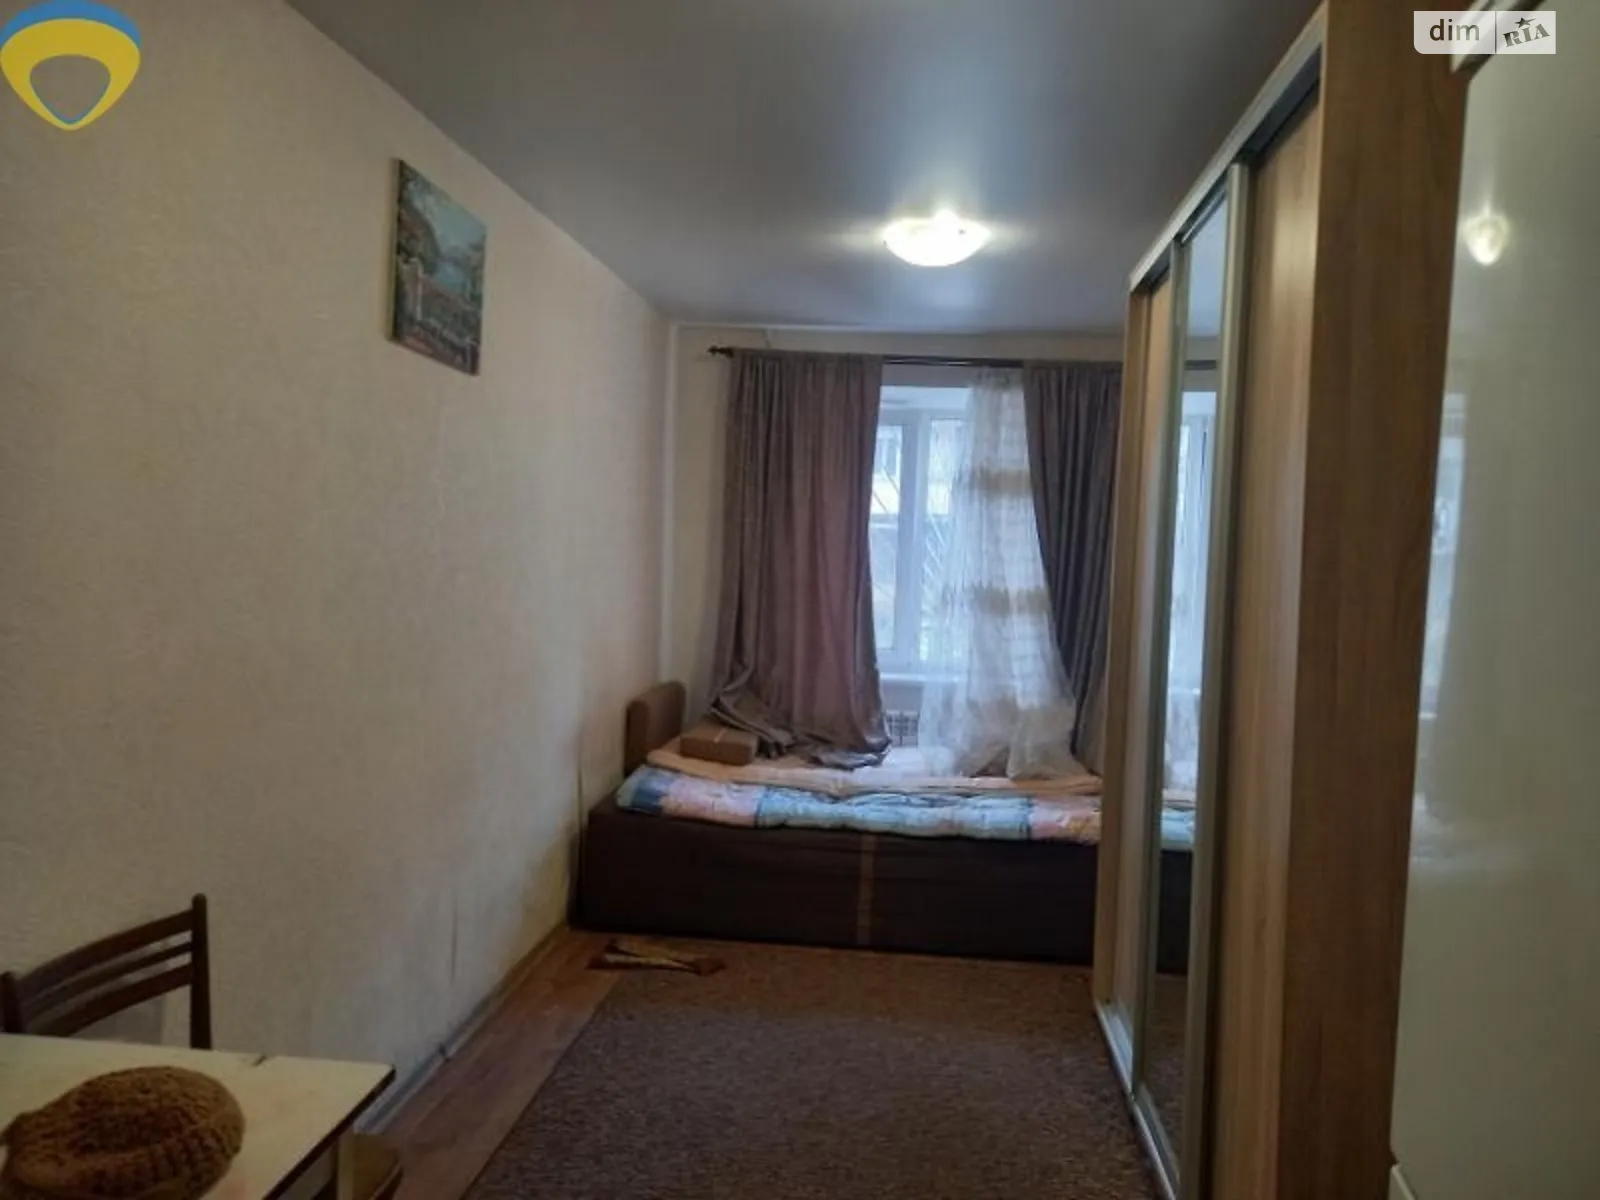 Продается комната 15 кв. м в Одессе, цена: 6700 $ - фото 1